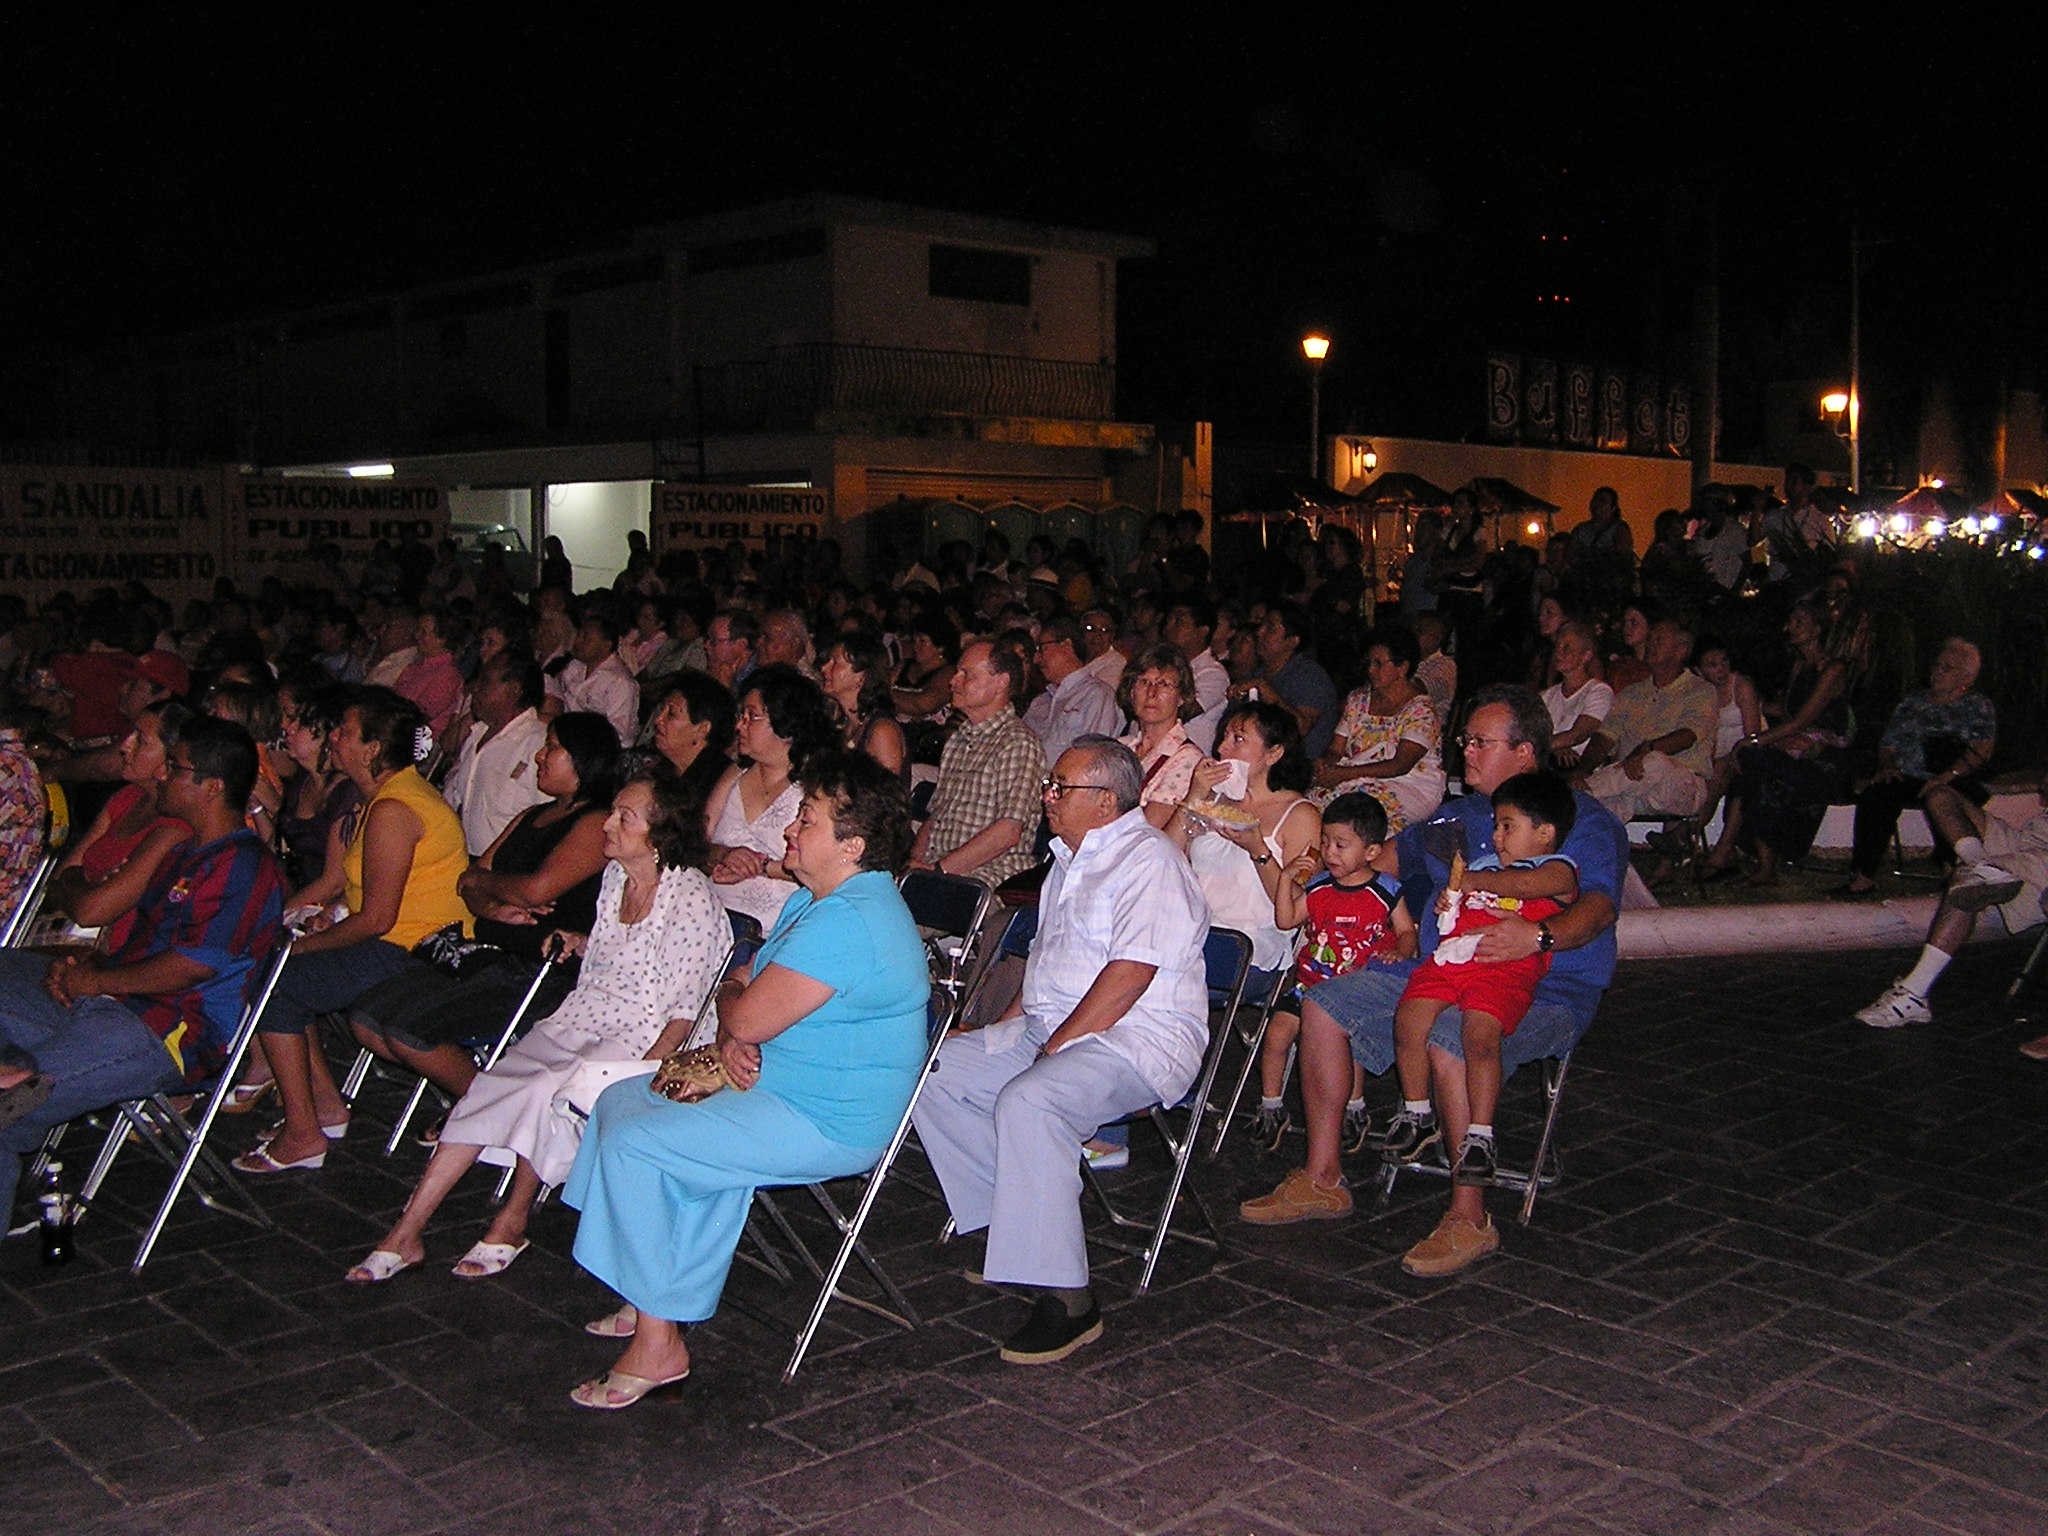 The audience on Paseo de Montejo